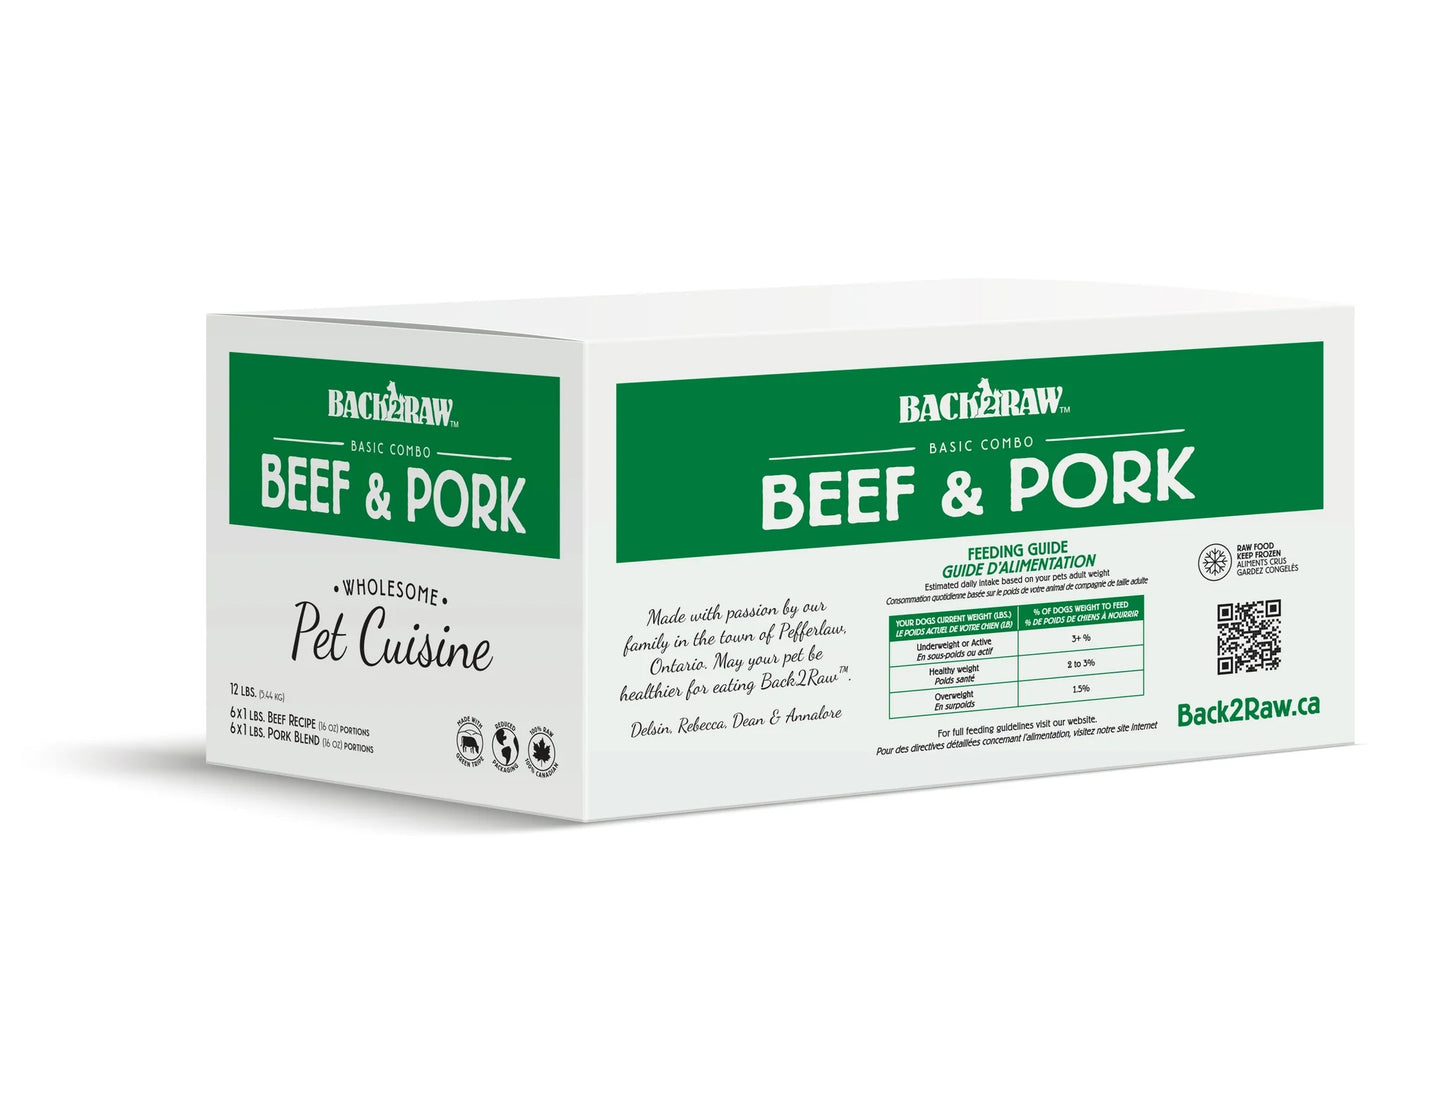 Basic Beef & Pork Combo